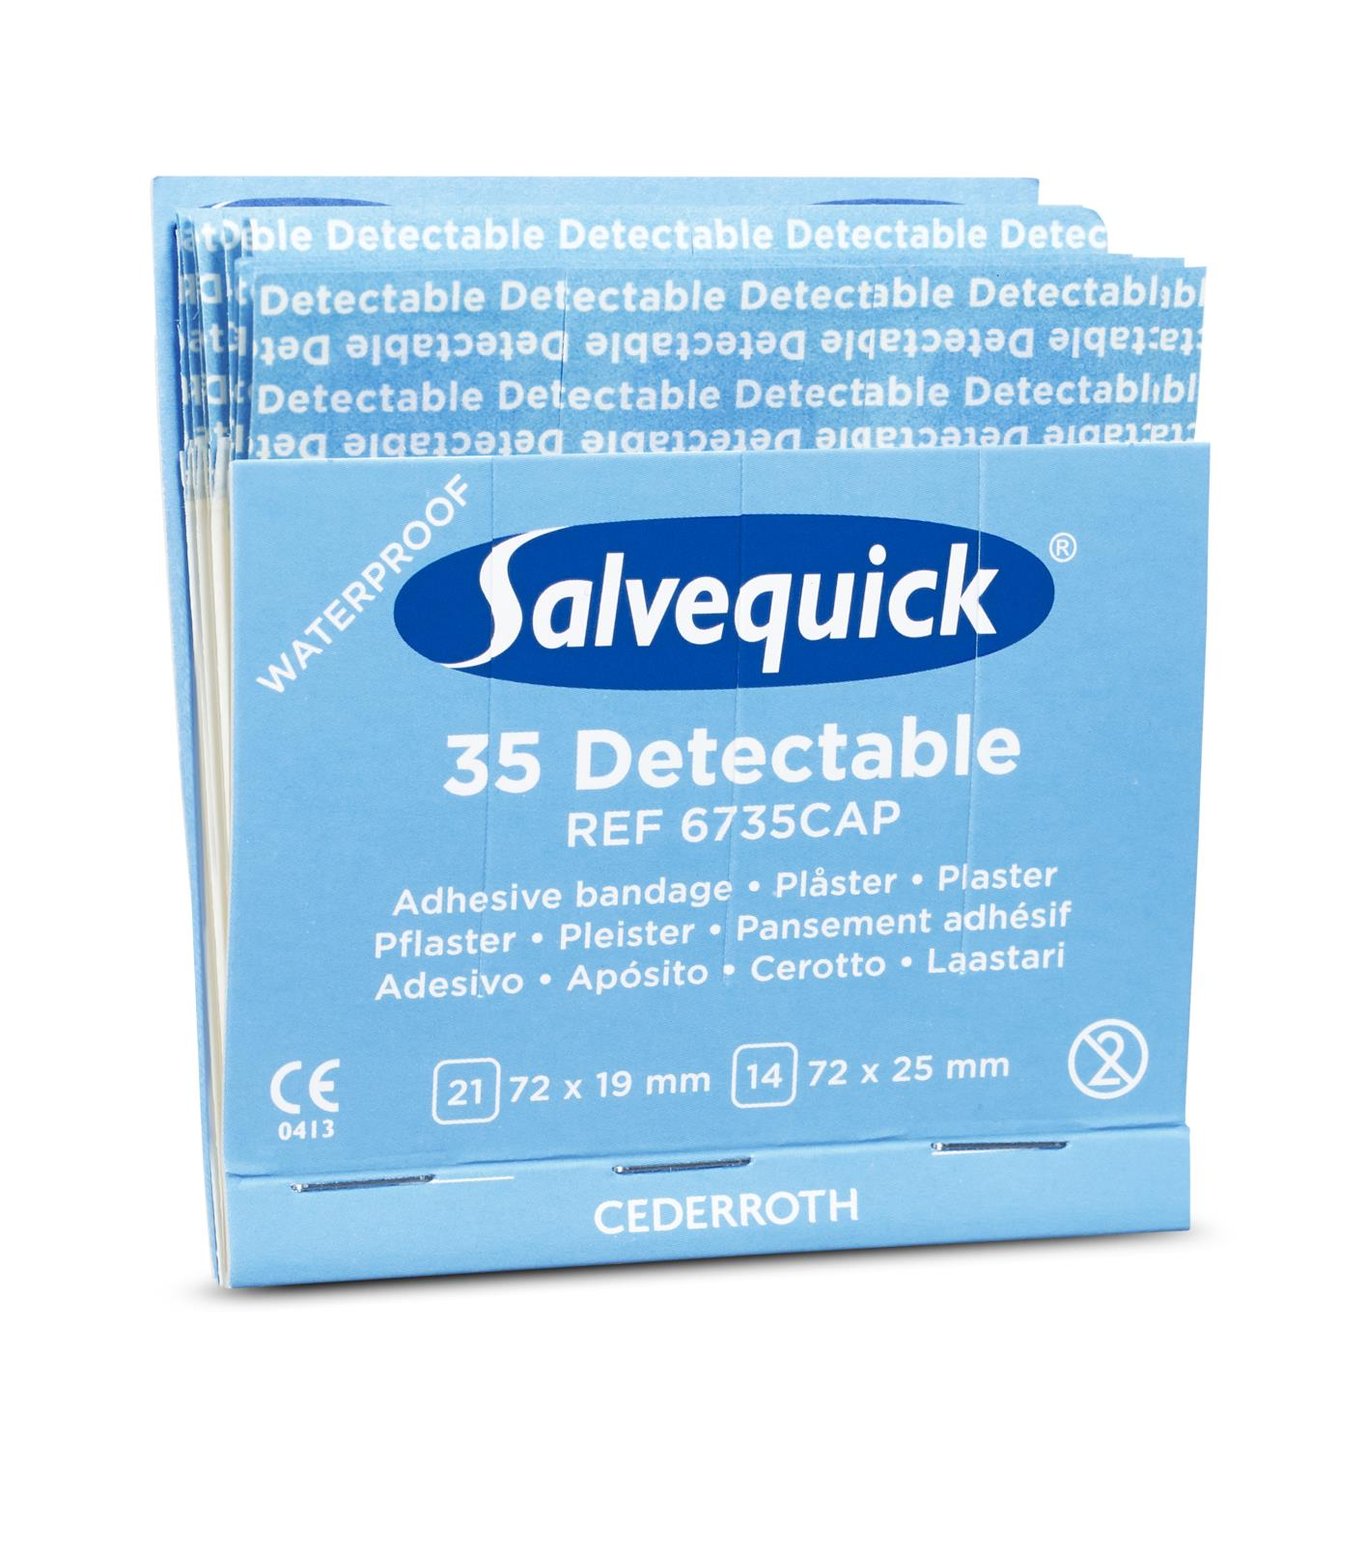 Plåster Salvequick Detectable 6735 35st Blå 51500020_2